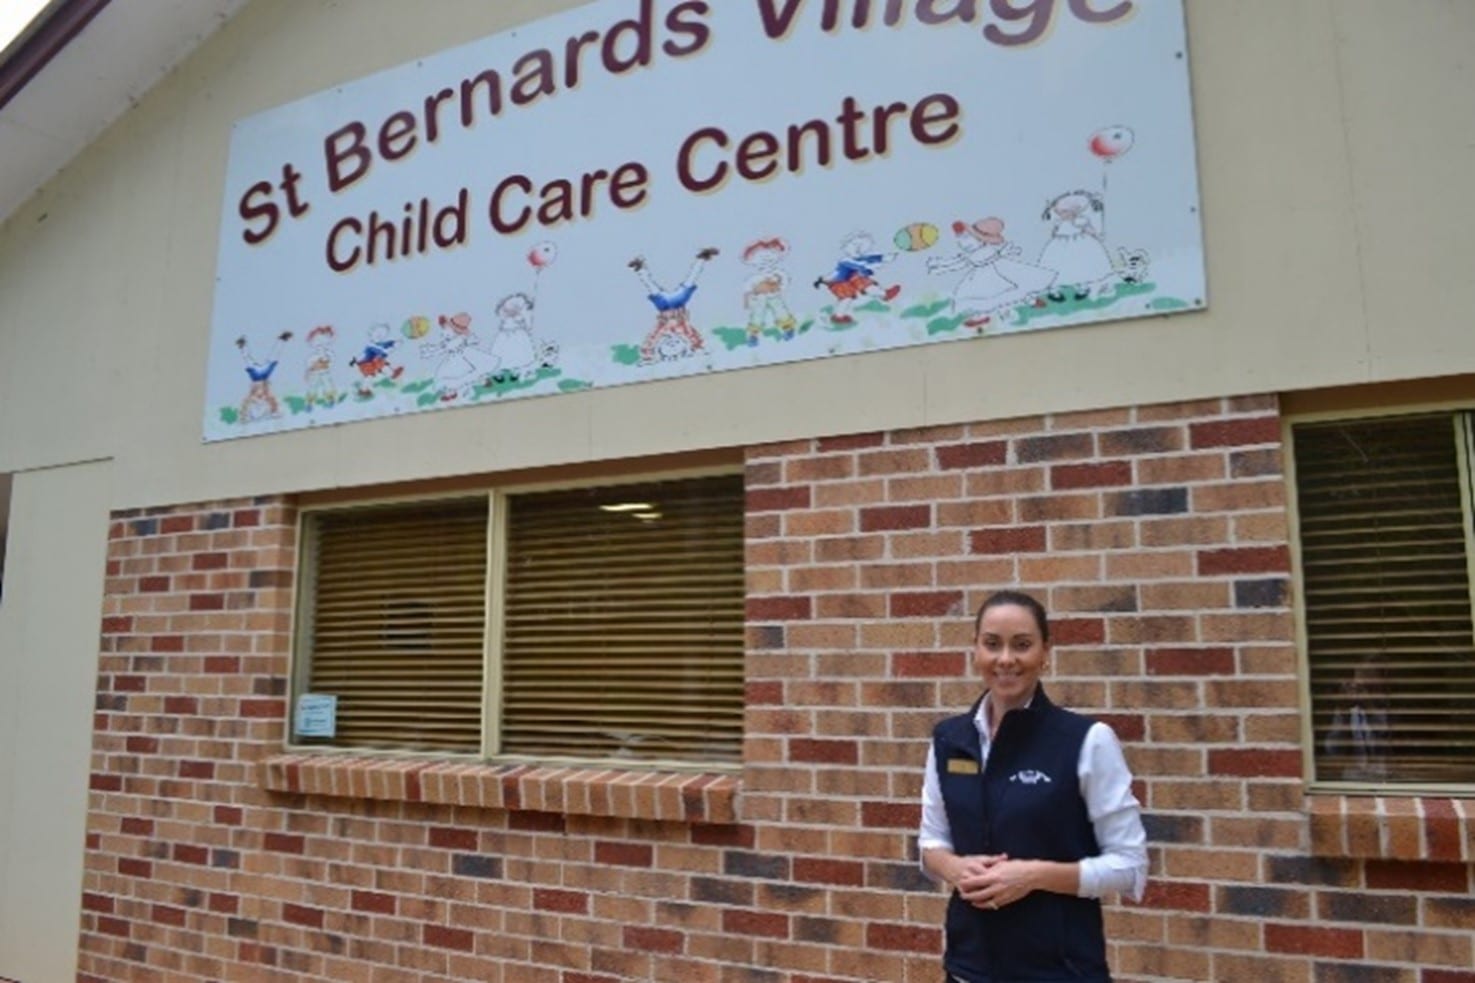 St Bernards Village Child Care Centre